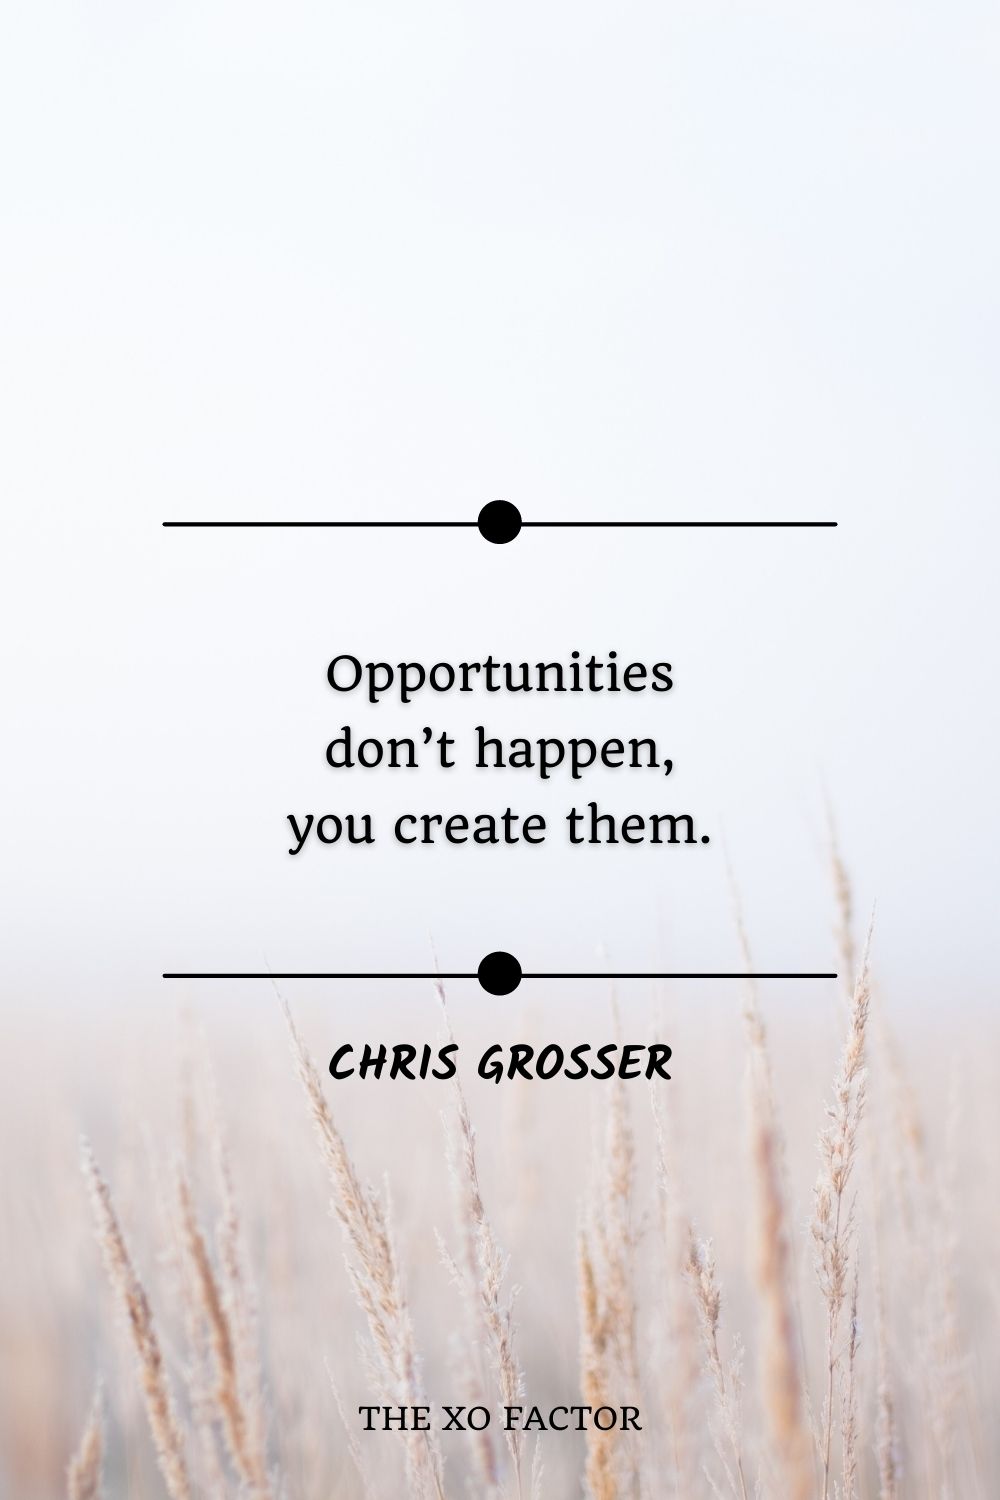 Opportunities don’t happen, you create them. Chris Grosser